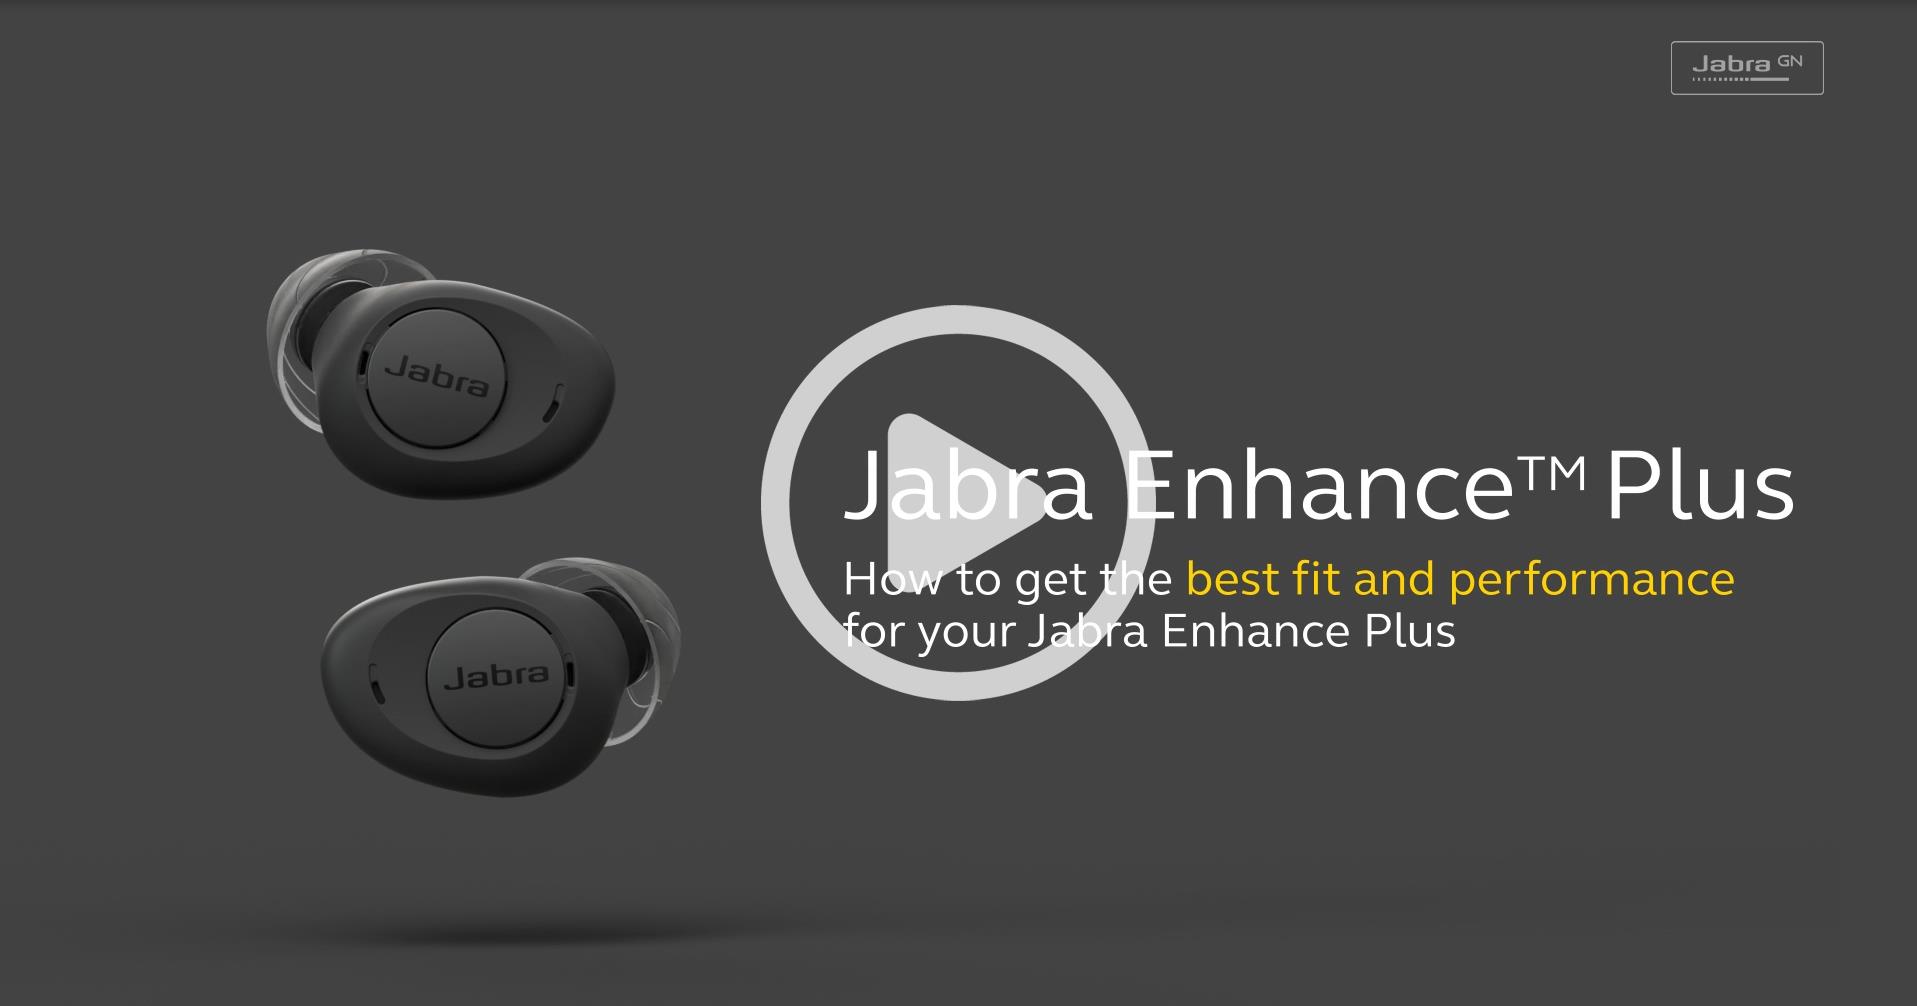 Beltone hearing aid support | Jabra Enhance Plus